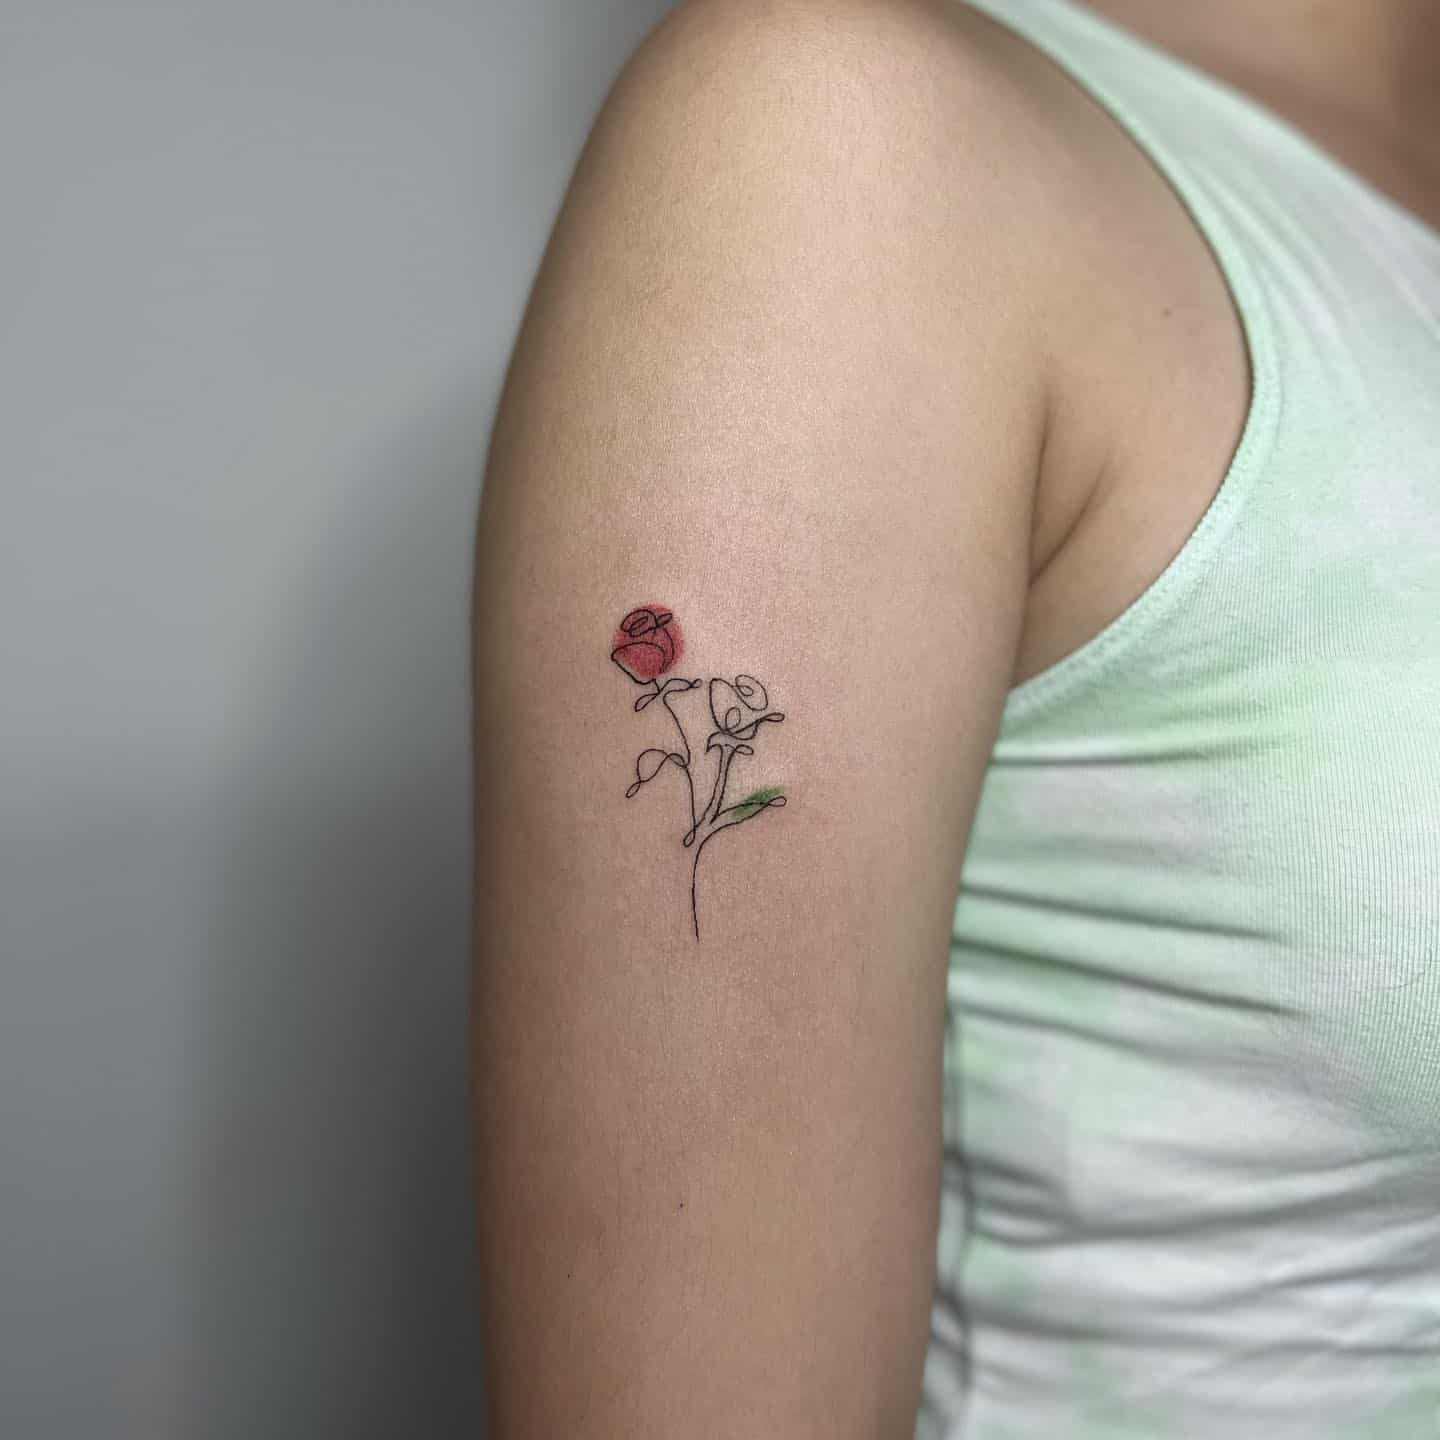 Simple rose tattoo by boy fineline